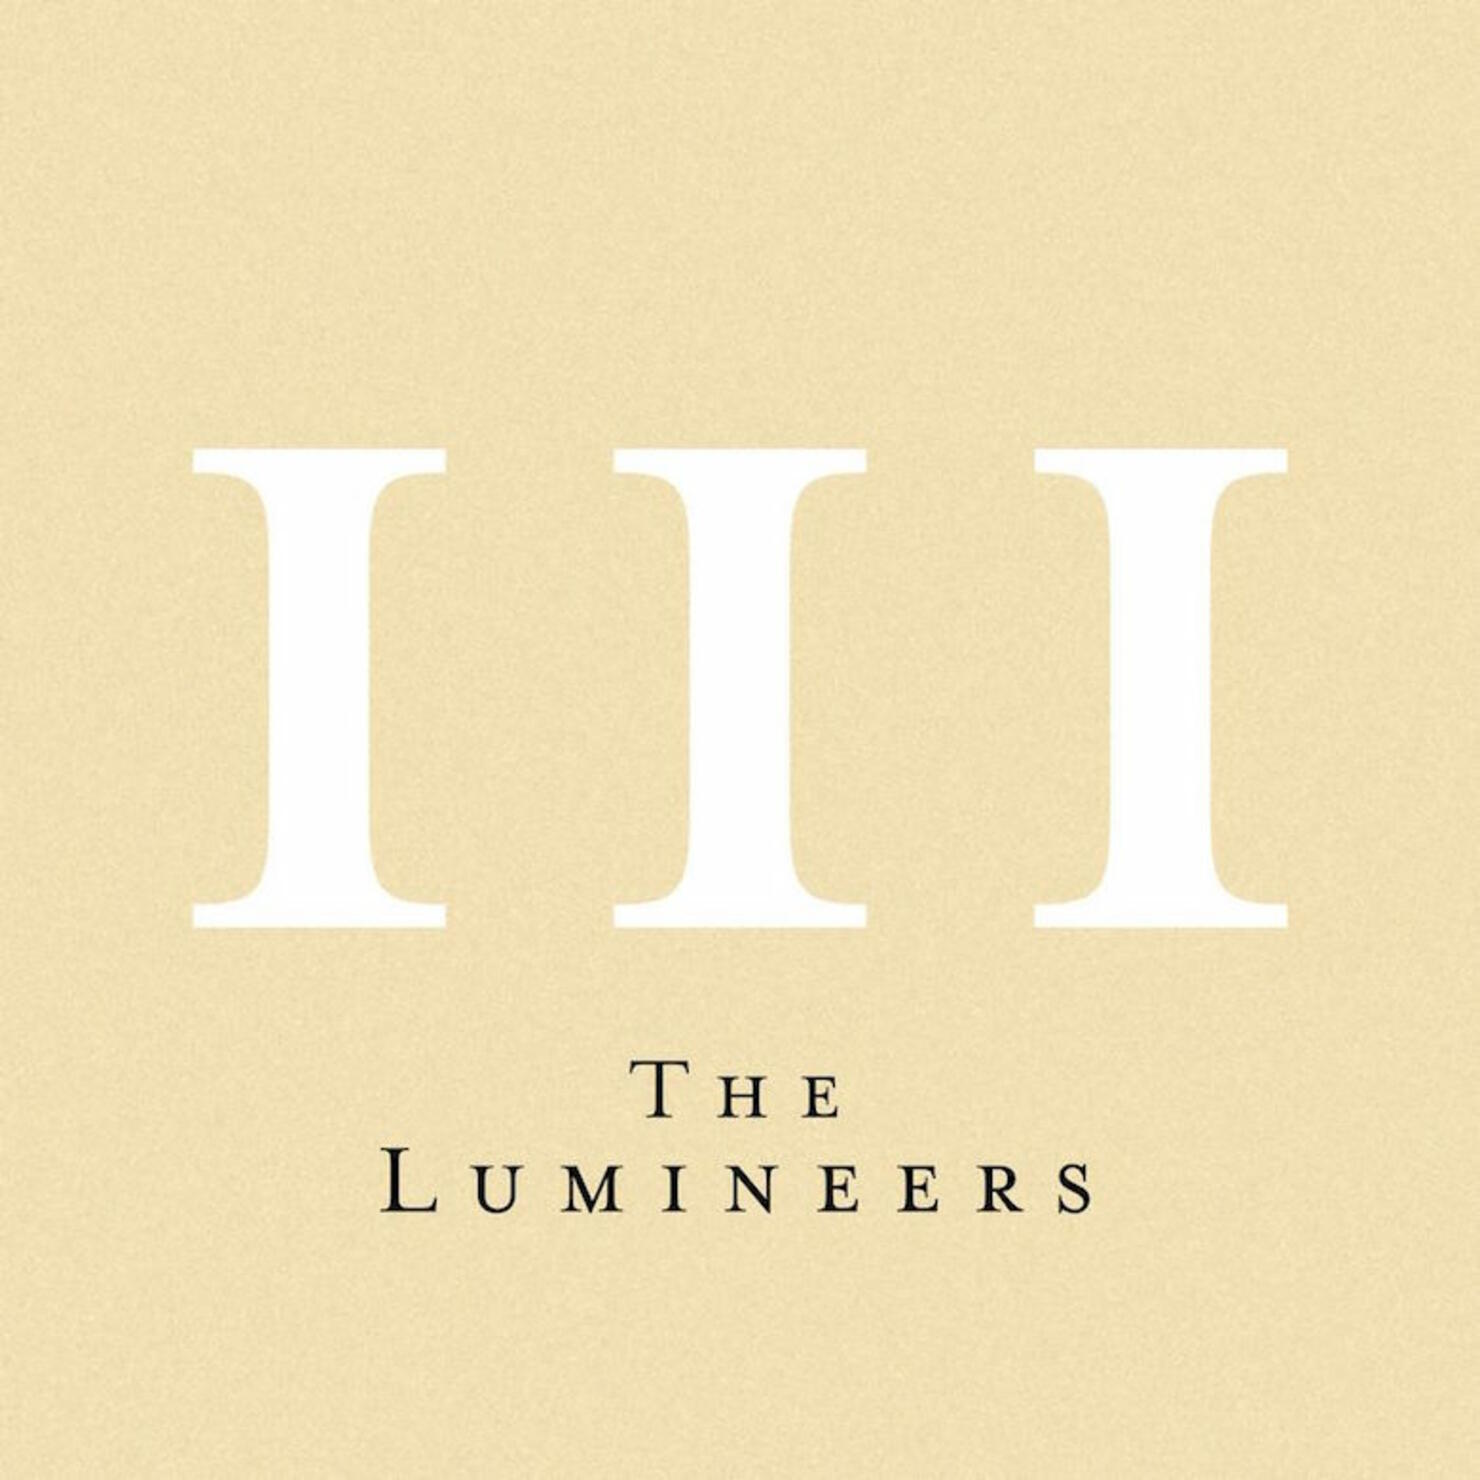 The Lumineers Return with New Song "Gloria," Announce New Album 'III